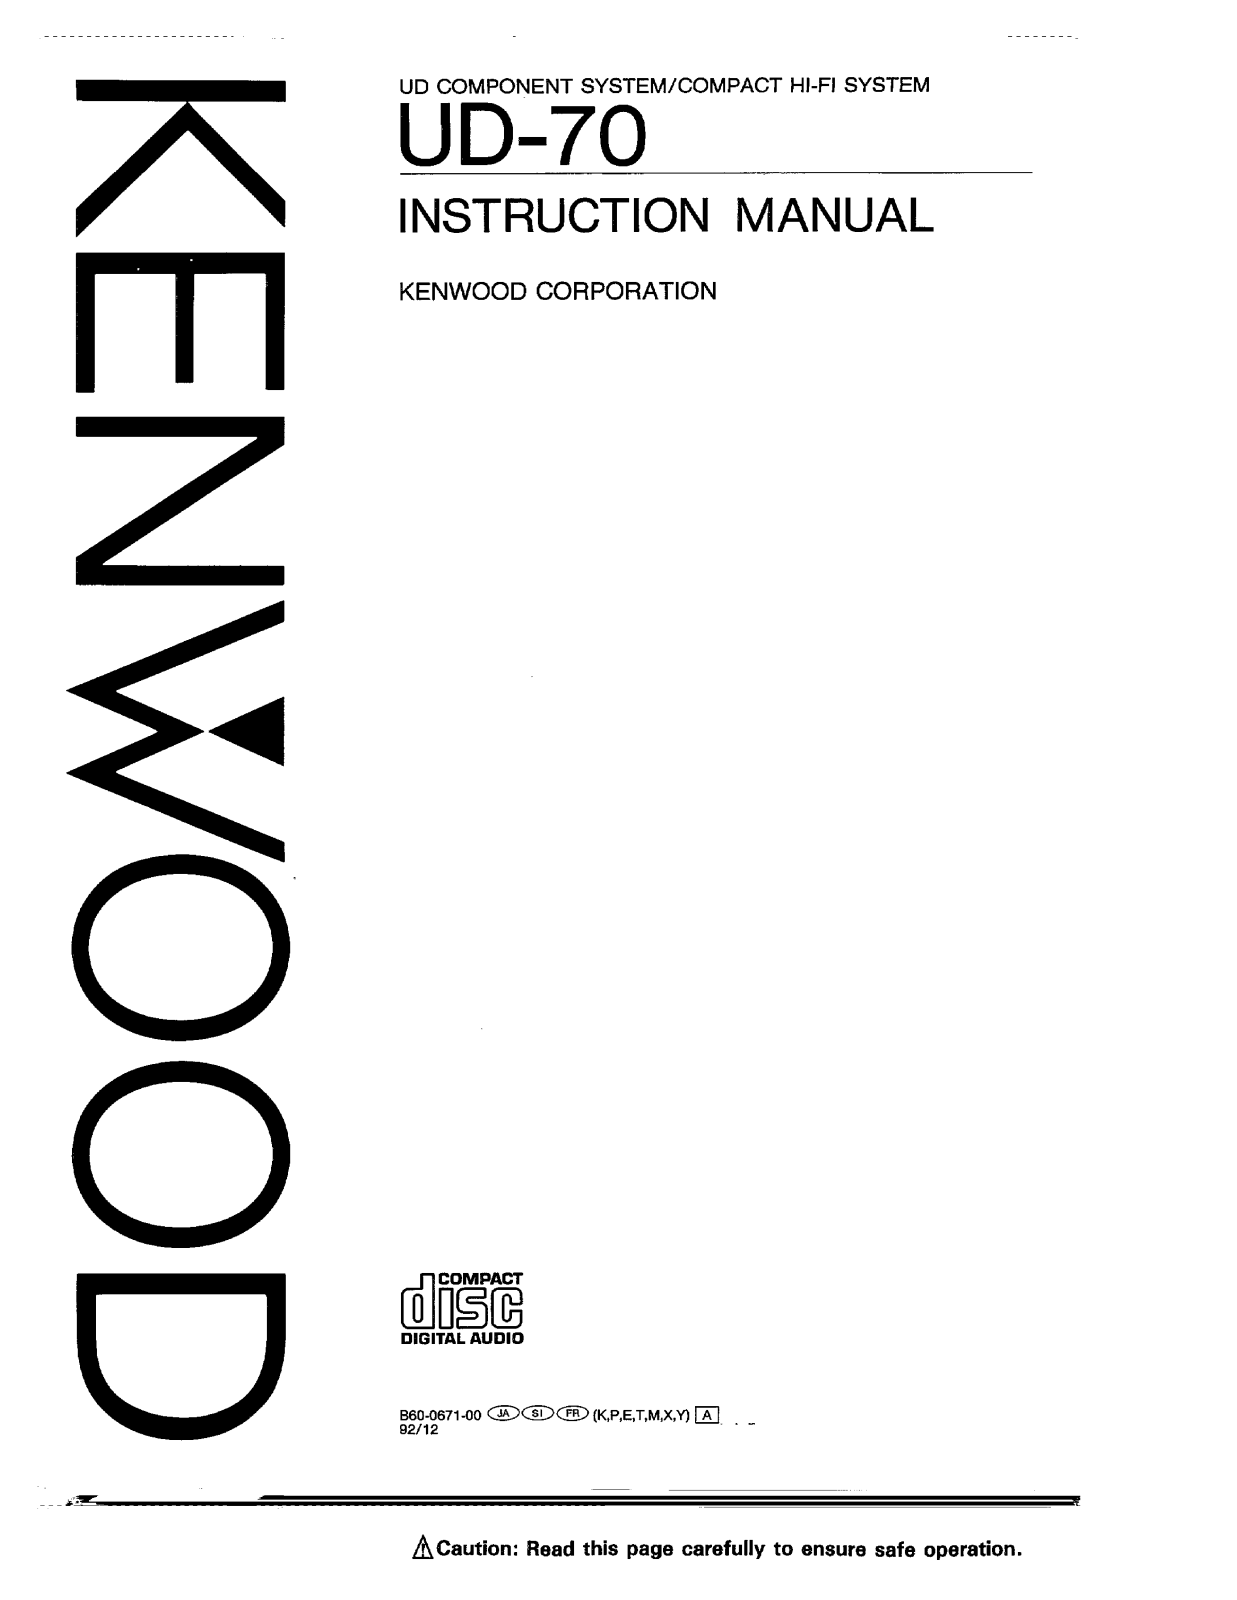 Kenwood UD-70, LS-622, GE-622, A-522, A-522L Owner's Manual